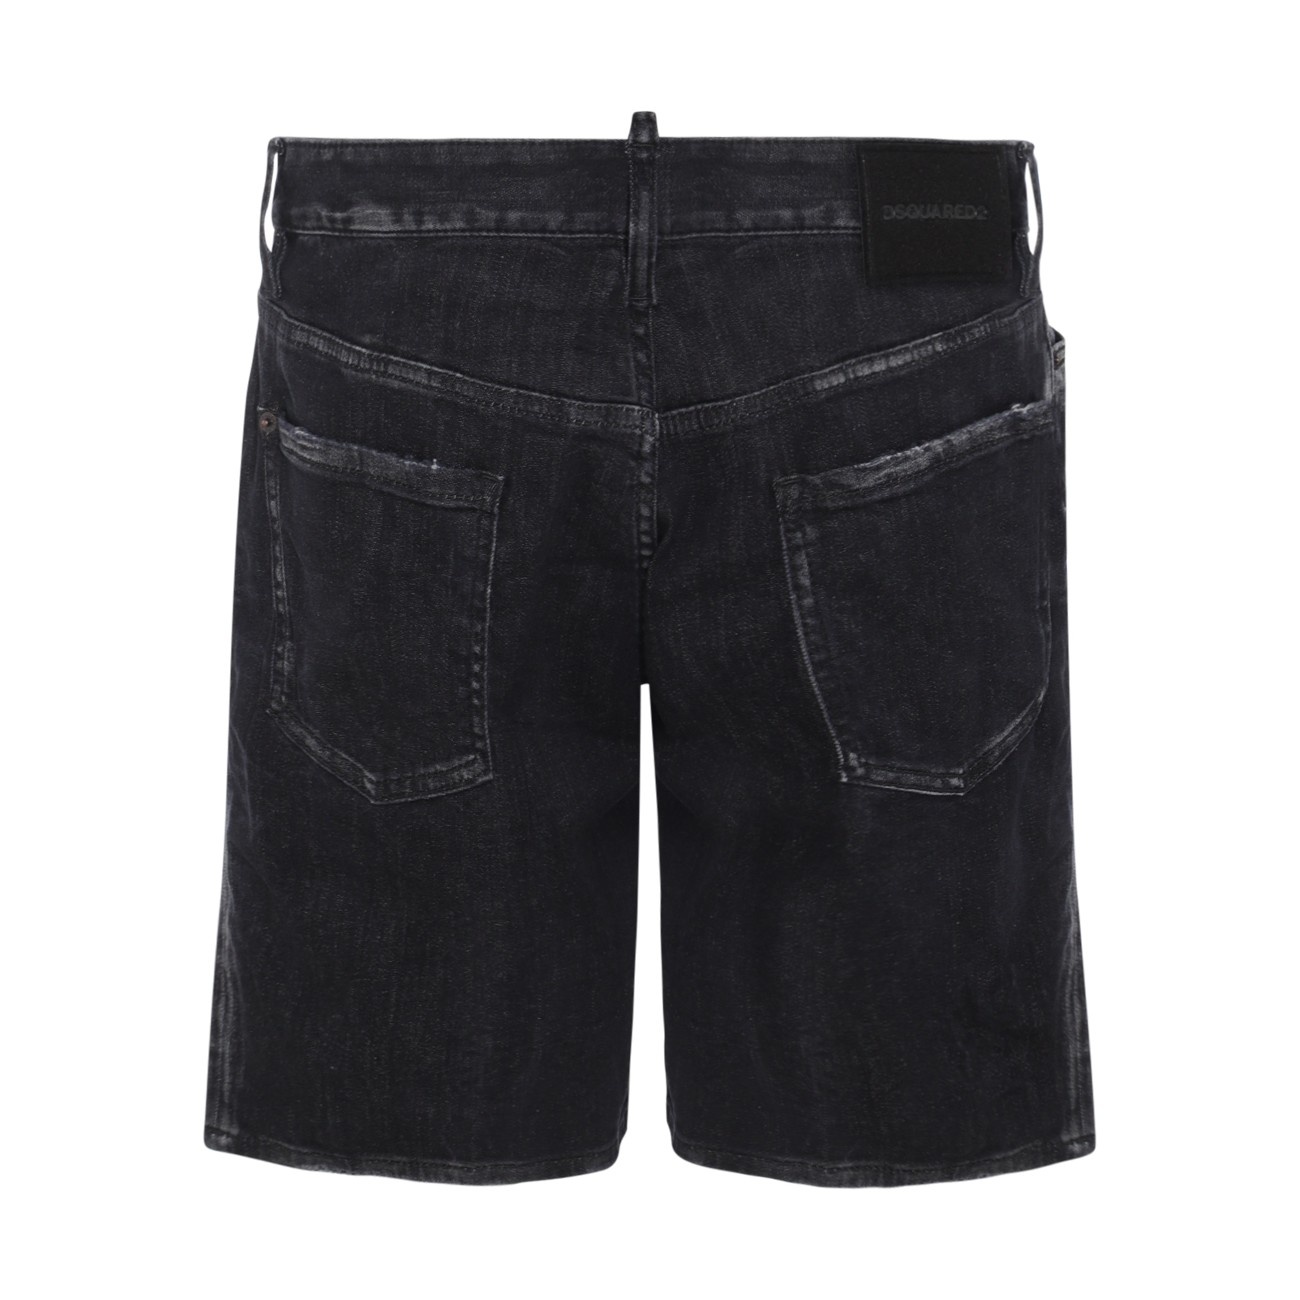 black cotton blend denim shorts - 2